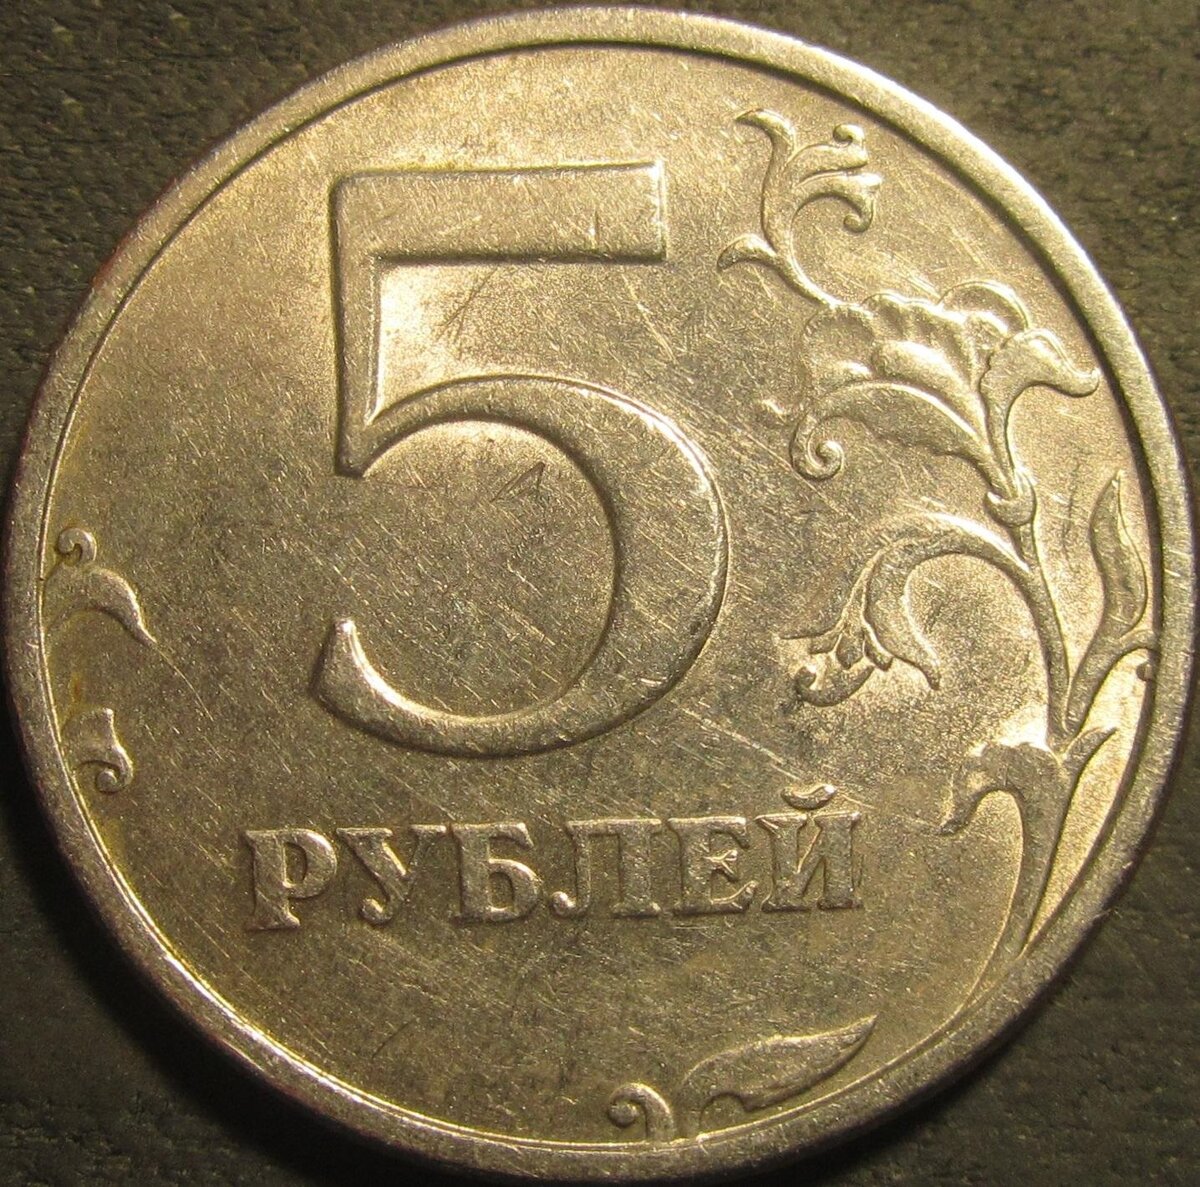 5 рублей метр. 5 Рублей 1998 ММД. 50 Рублей 1998. 5 Рублей найденная. 2 Рубль редкие 2014 года м знак приспущен.